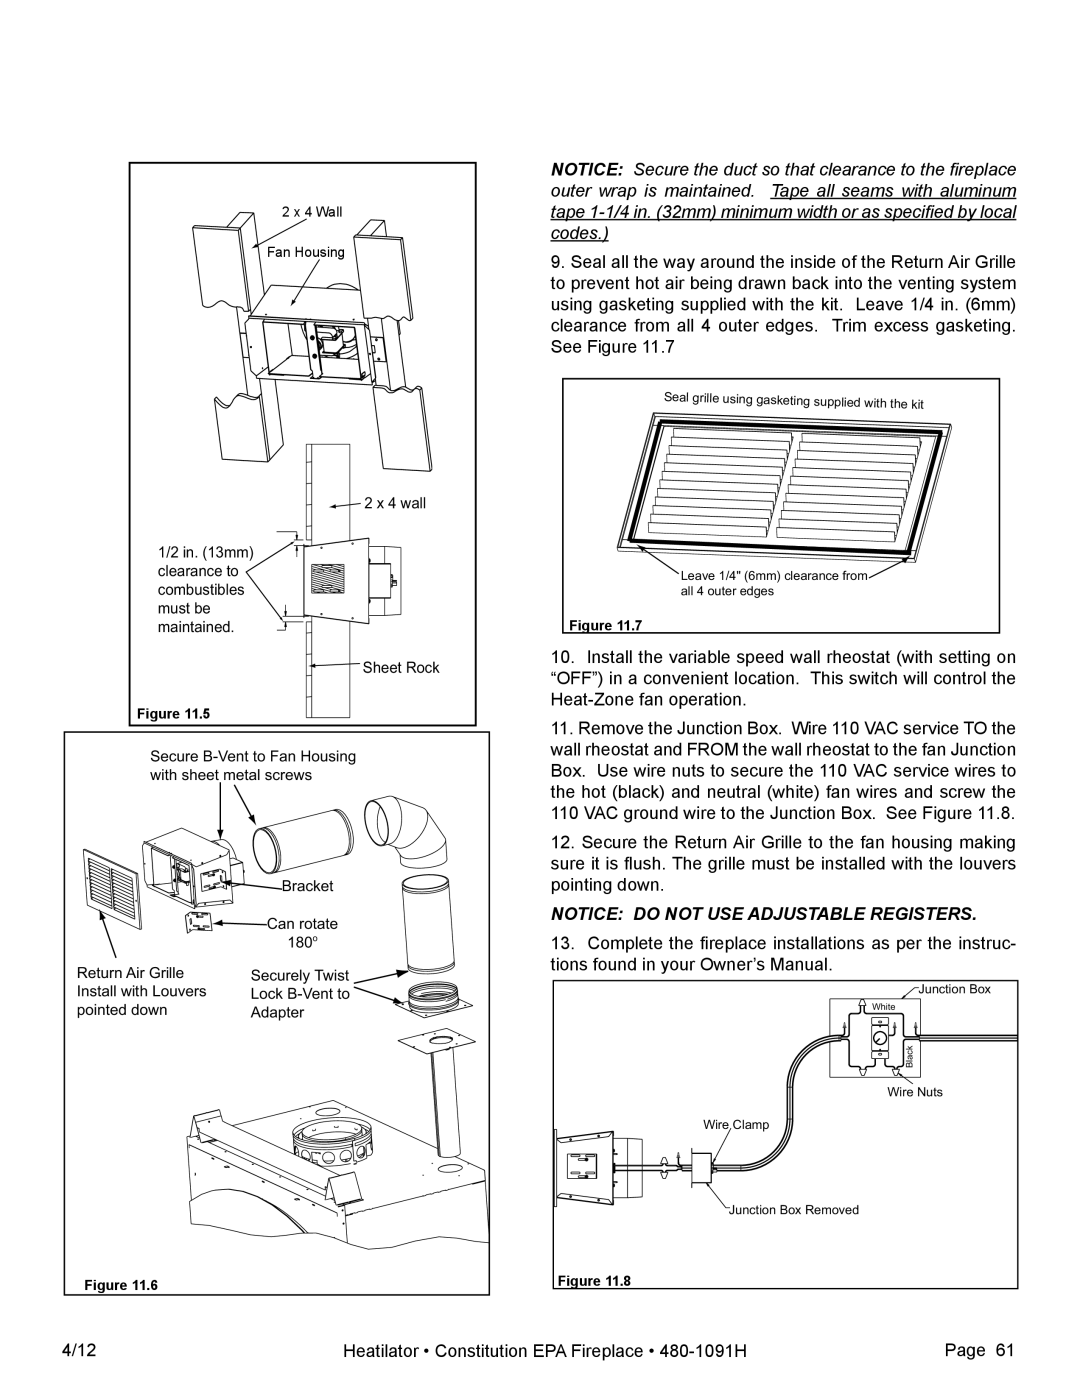 Heatiator C40 owner manual Notice: Do Not Use Adjustable Registers 